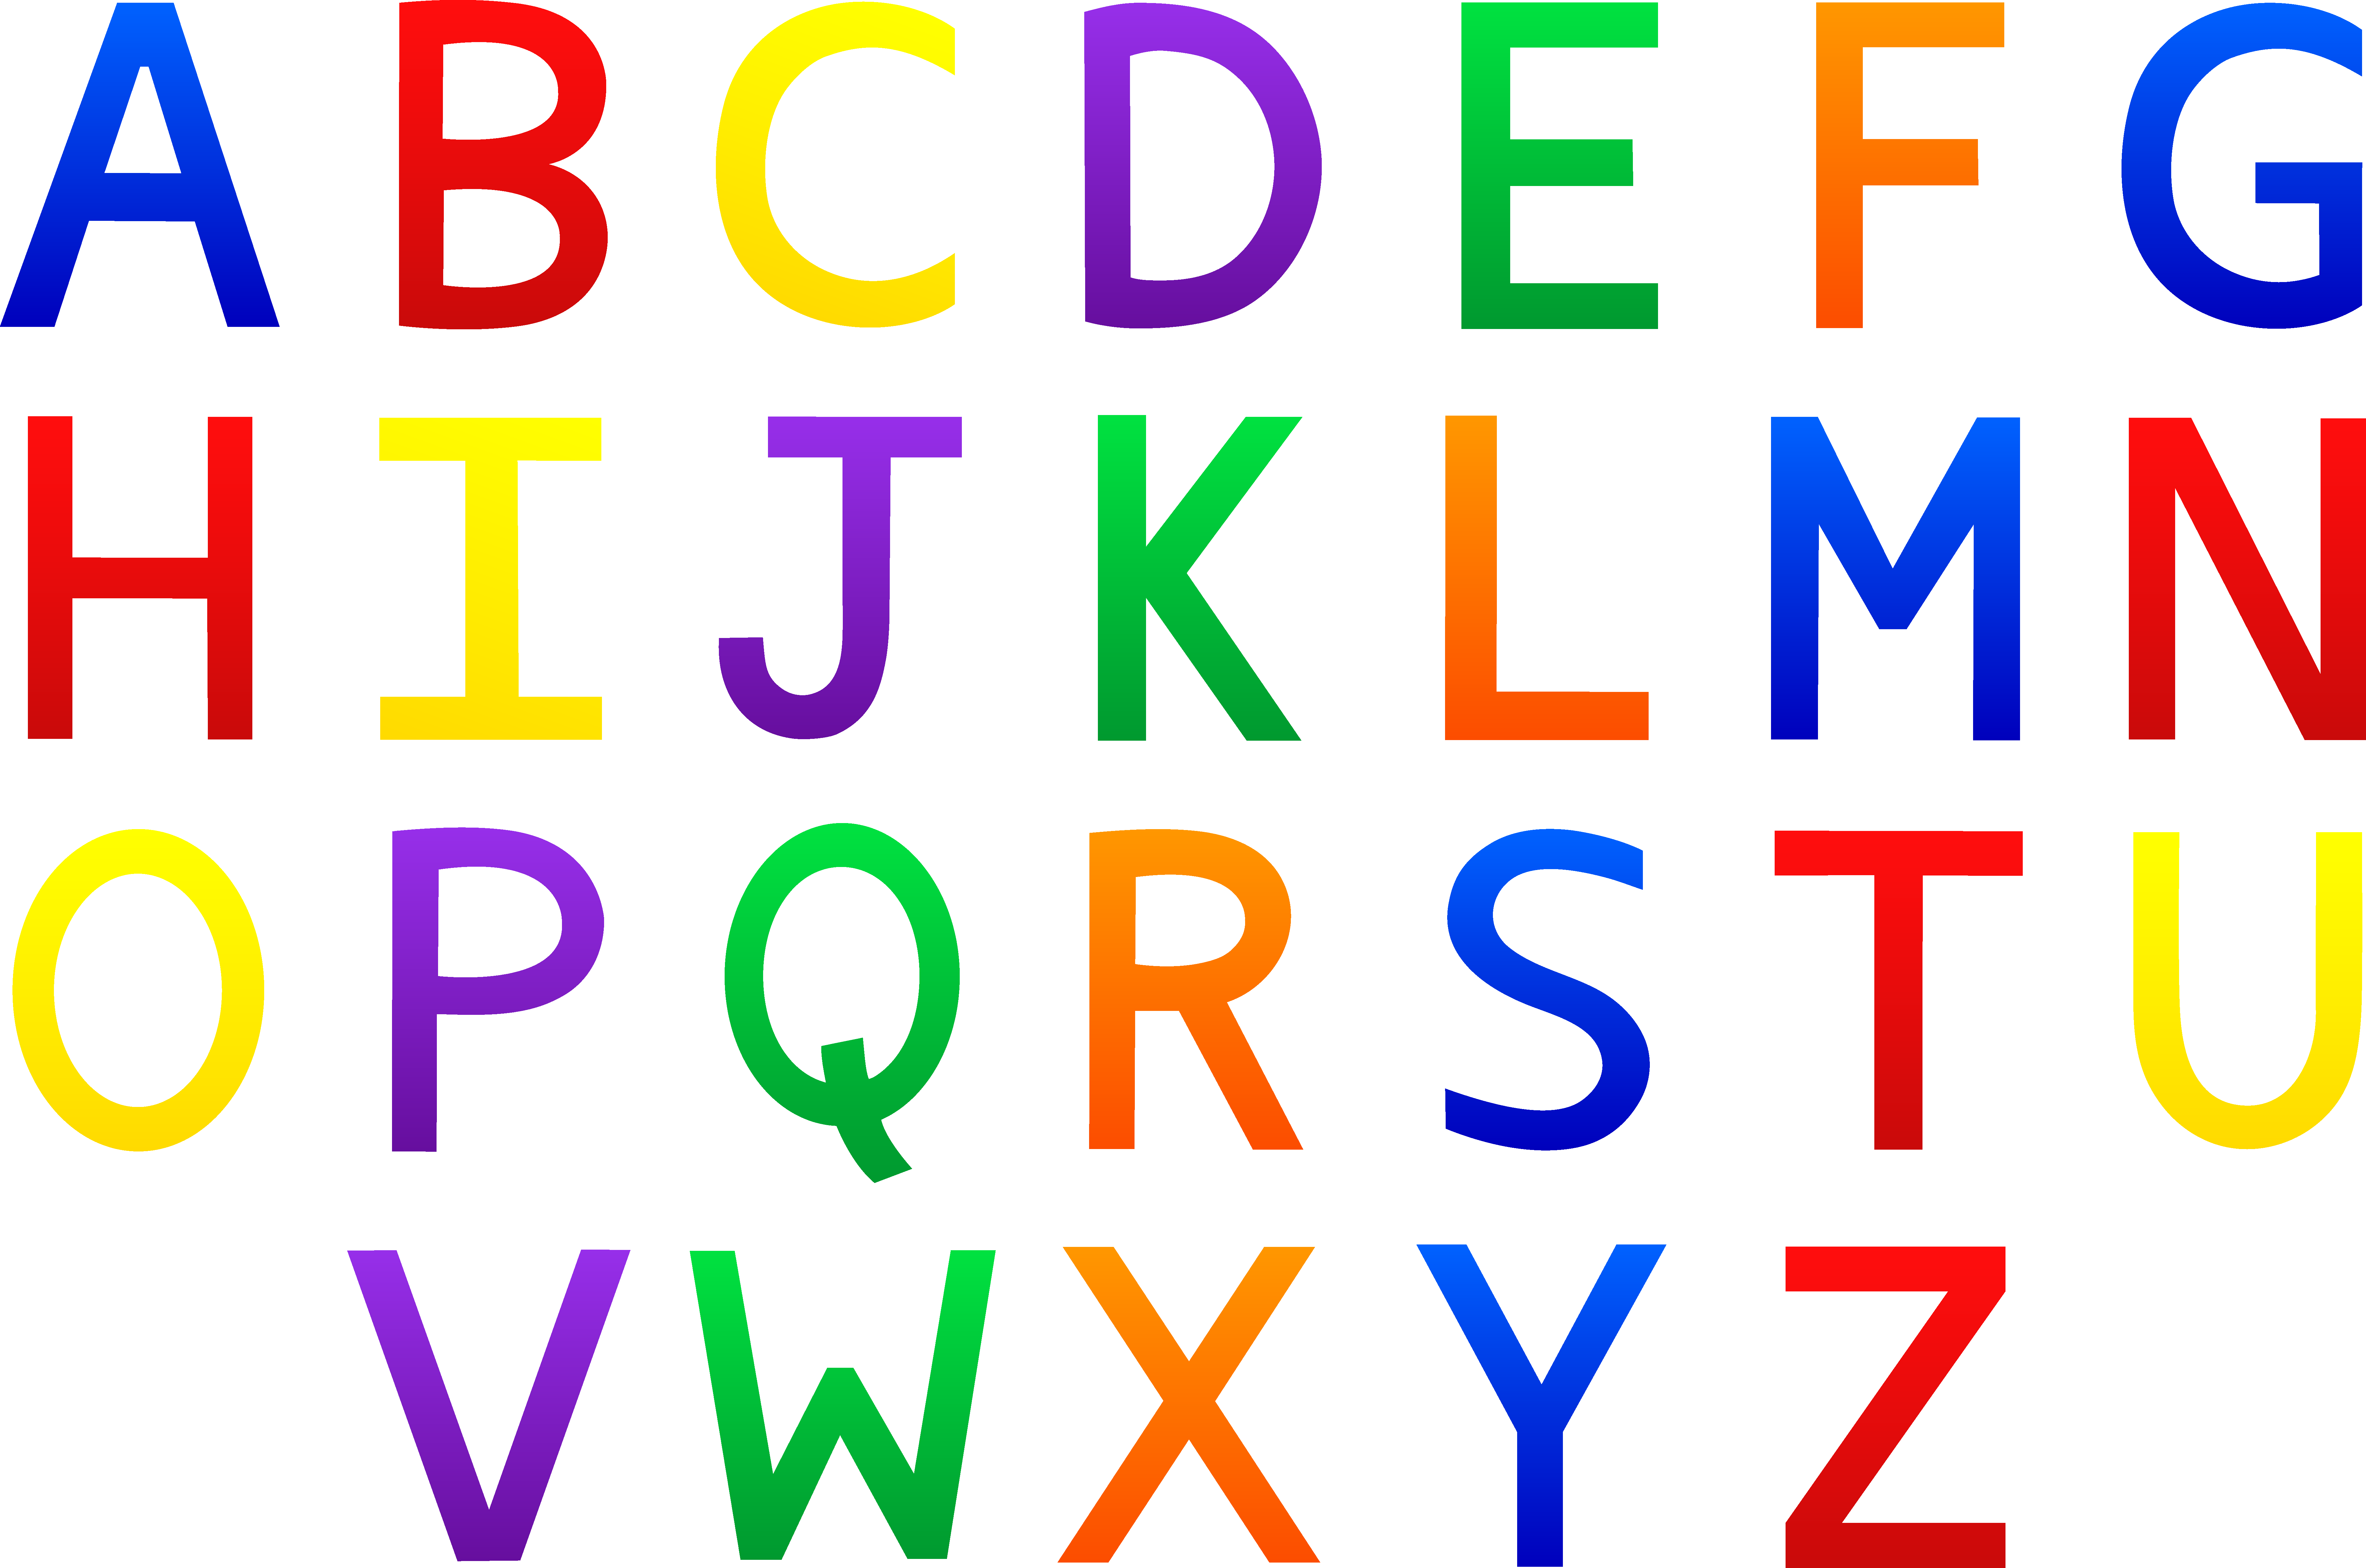 Free Alphabet Clip Art